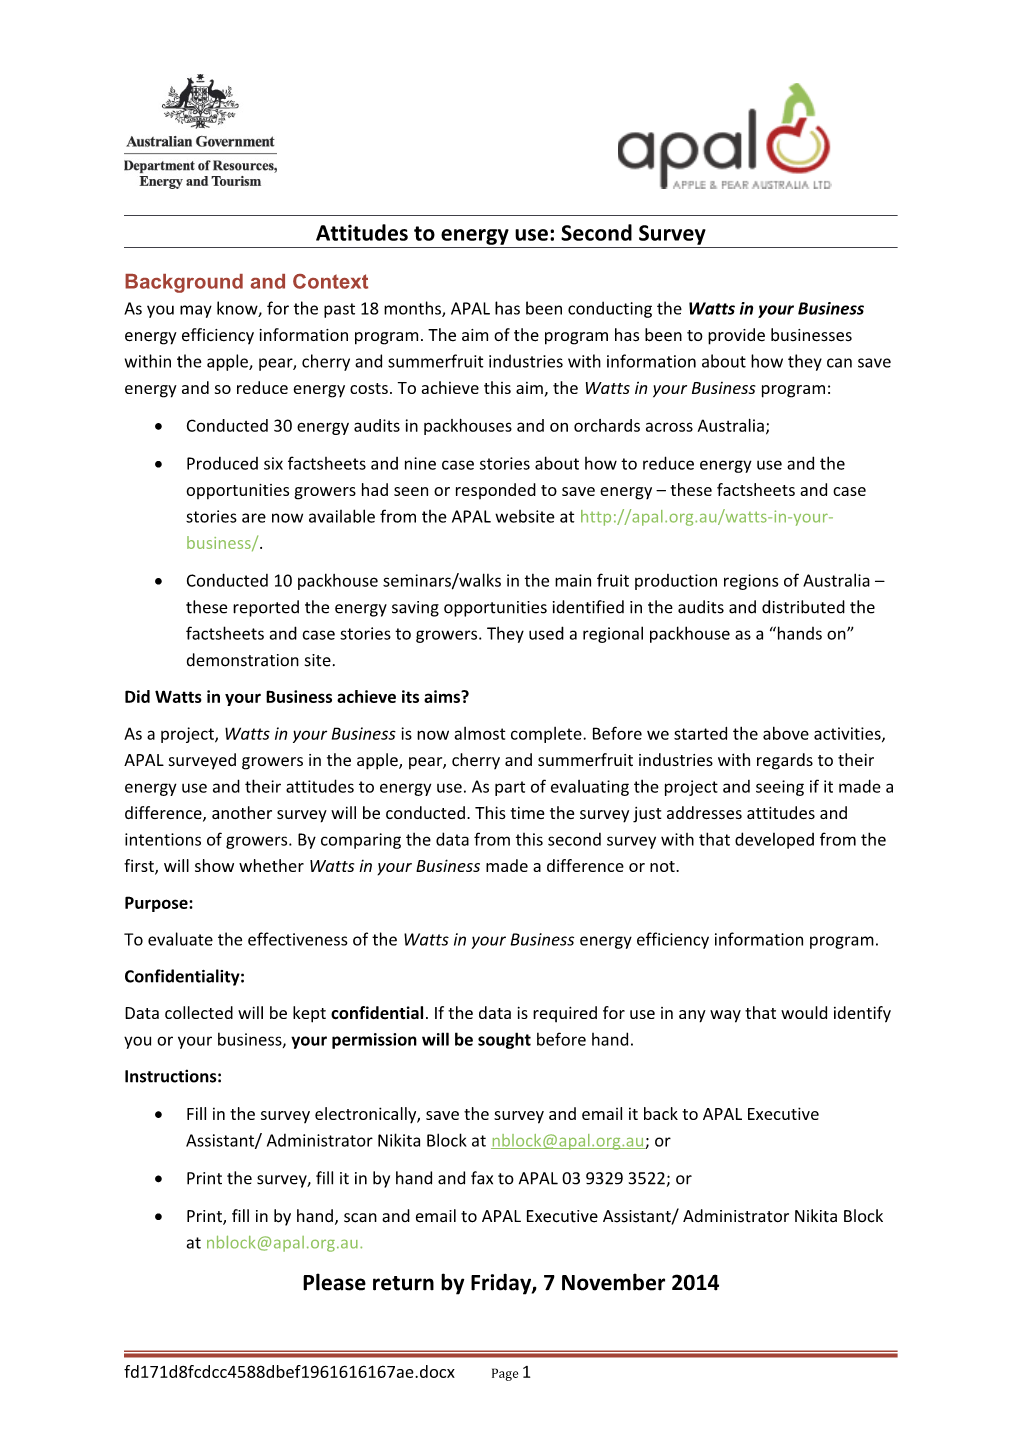 Attitudes to Energy Use: Second Survey